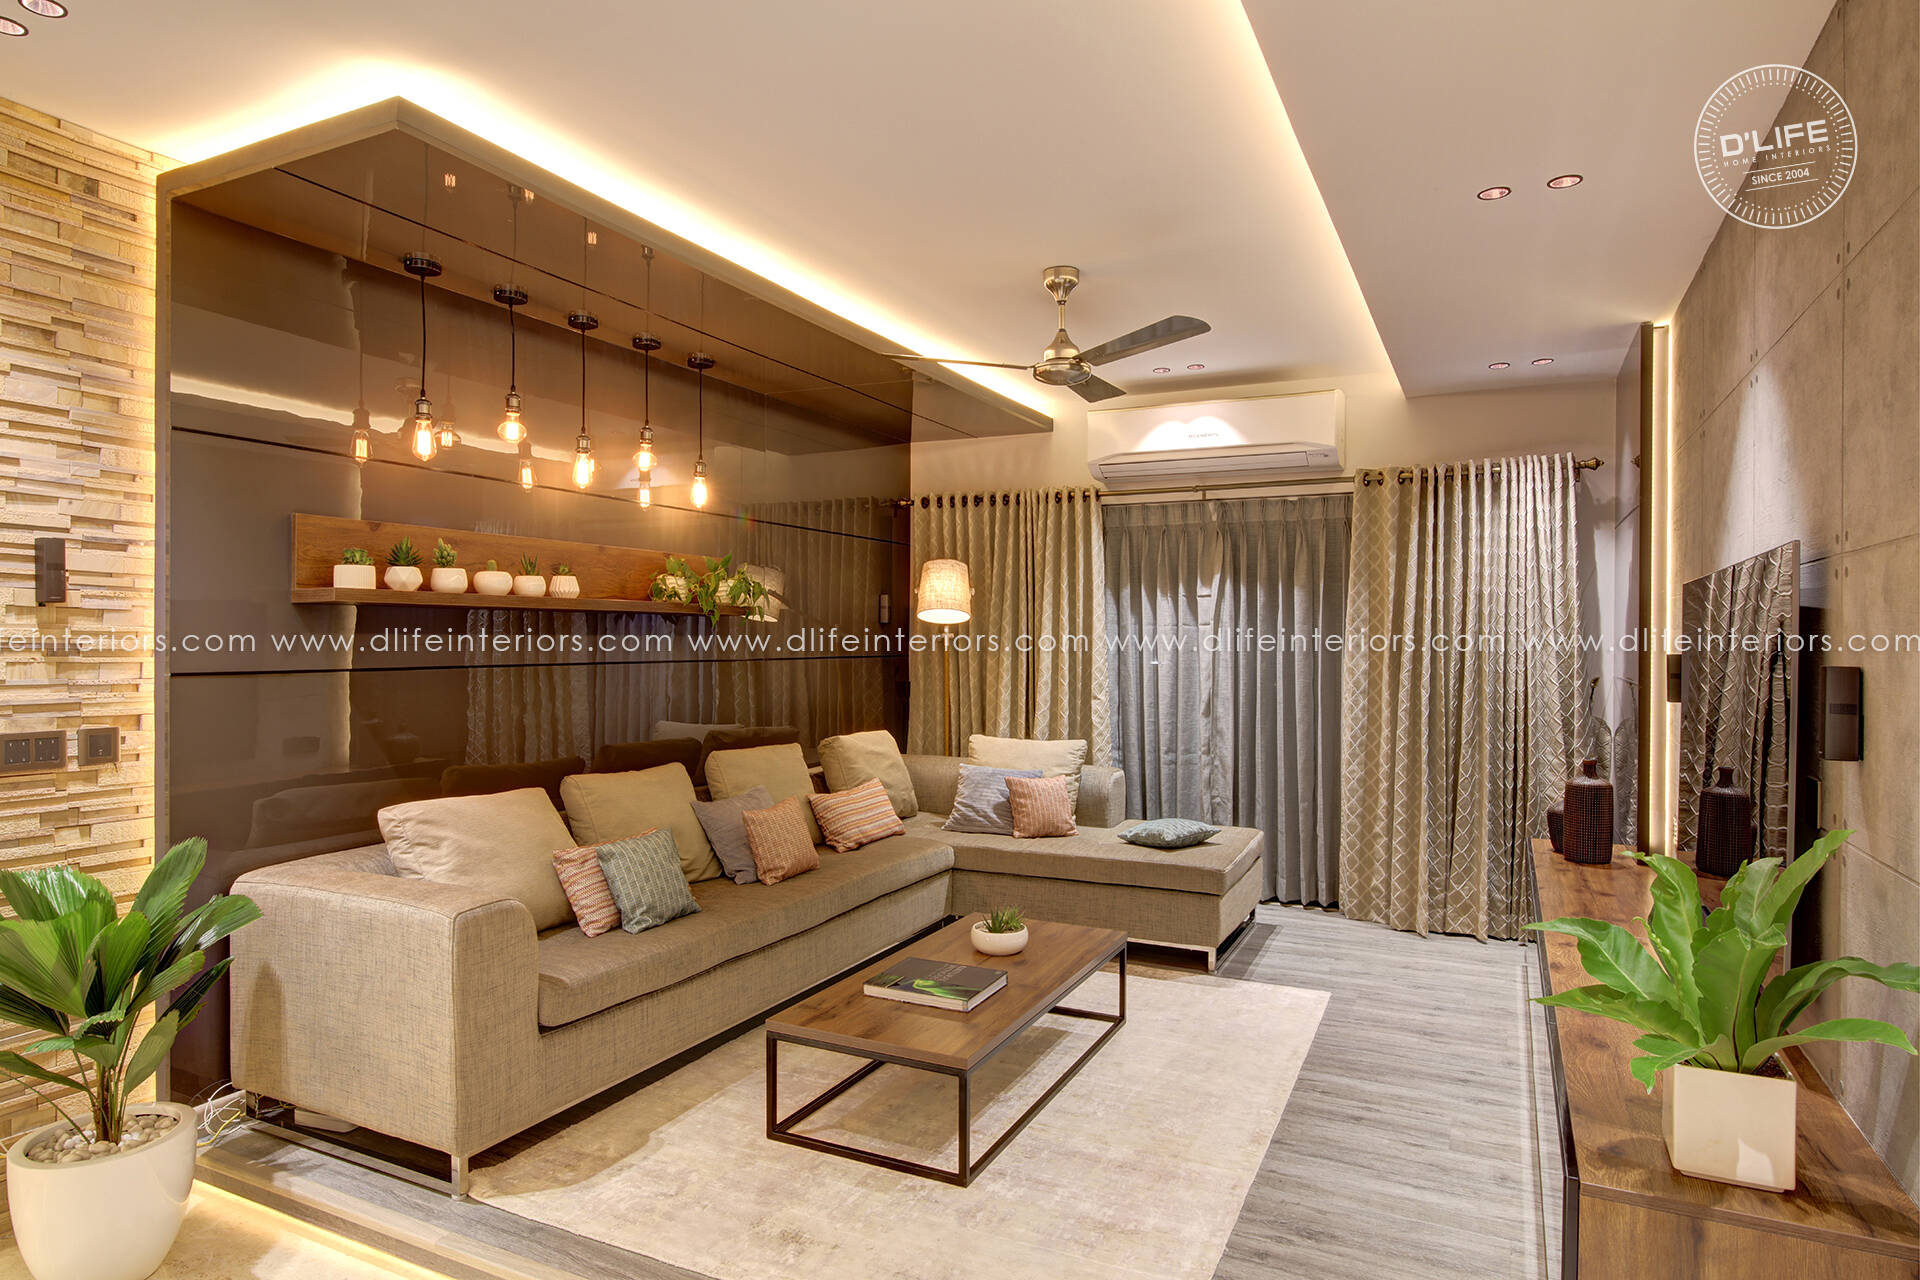 Discover Mumbai's Most Luxurious Interior House Design!